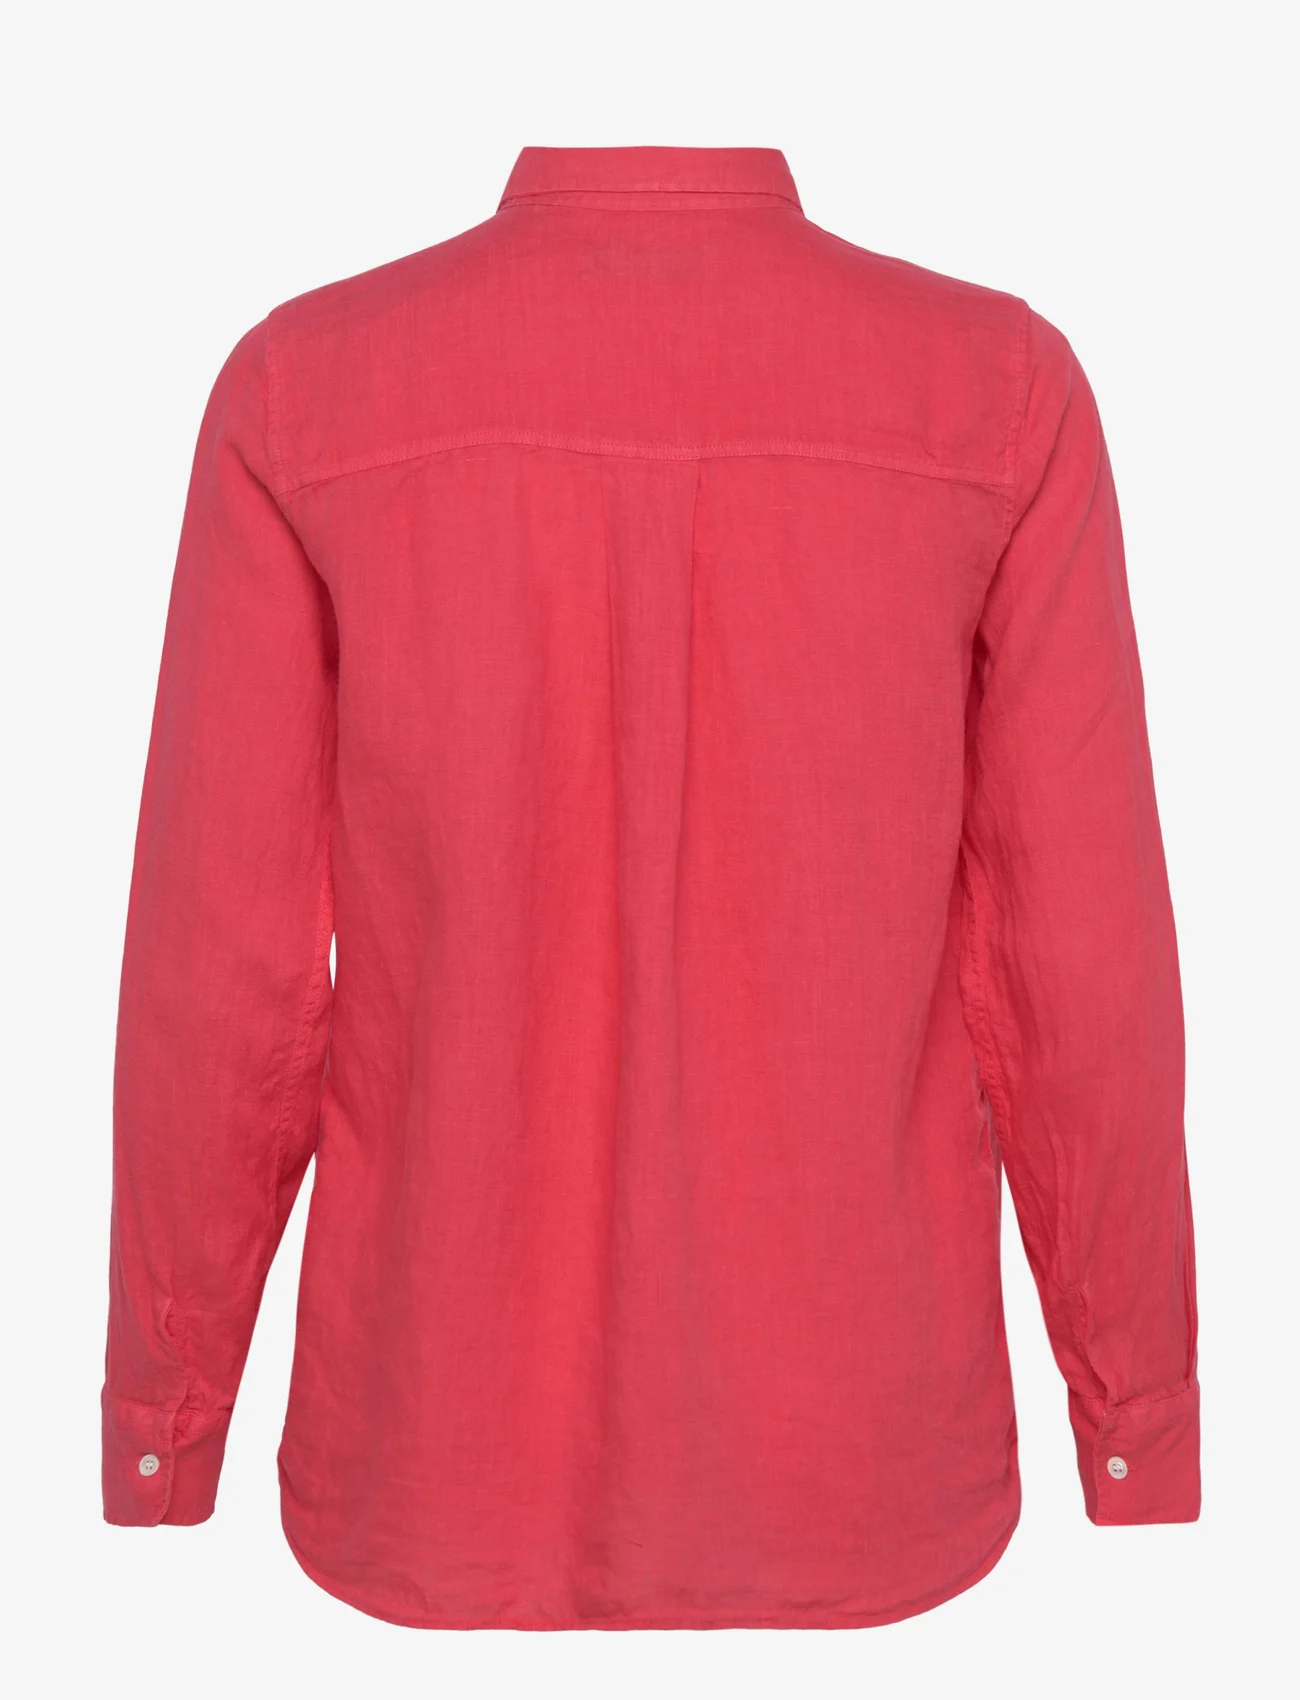 MOS MOSH - Karli Linen Shirt - linen shirts - teaberry - 1